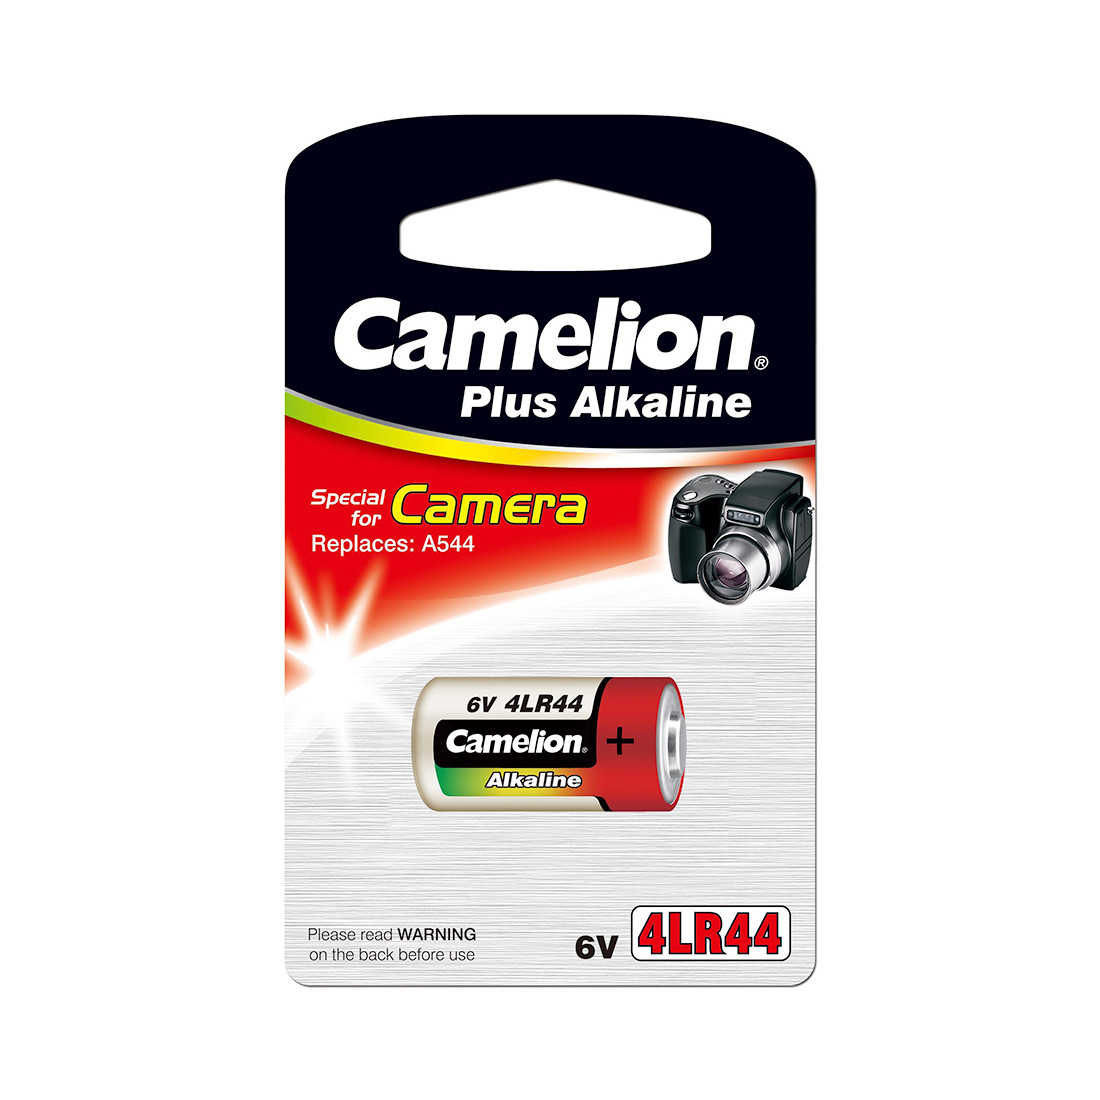 Батарейка  CAMELION  4LR44-BP1C  Photo Plus Alkaline  6V  150 mAh  1 шт.  Блистер